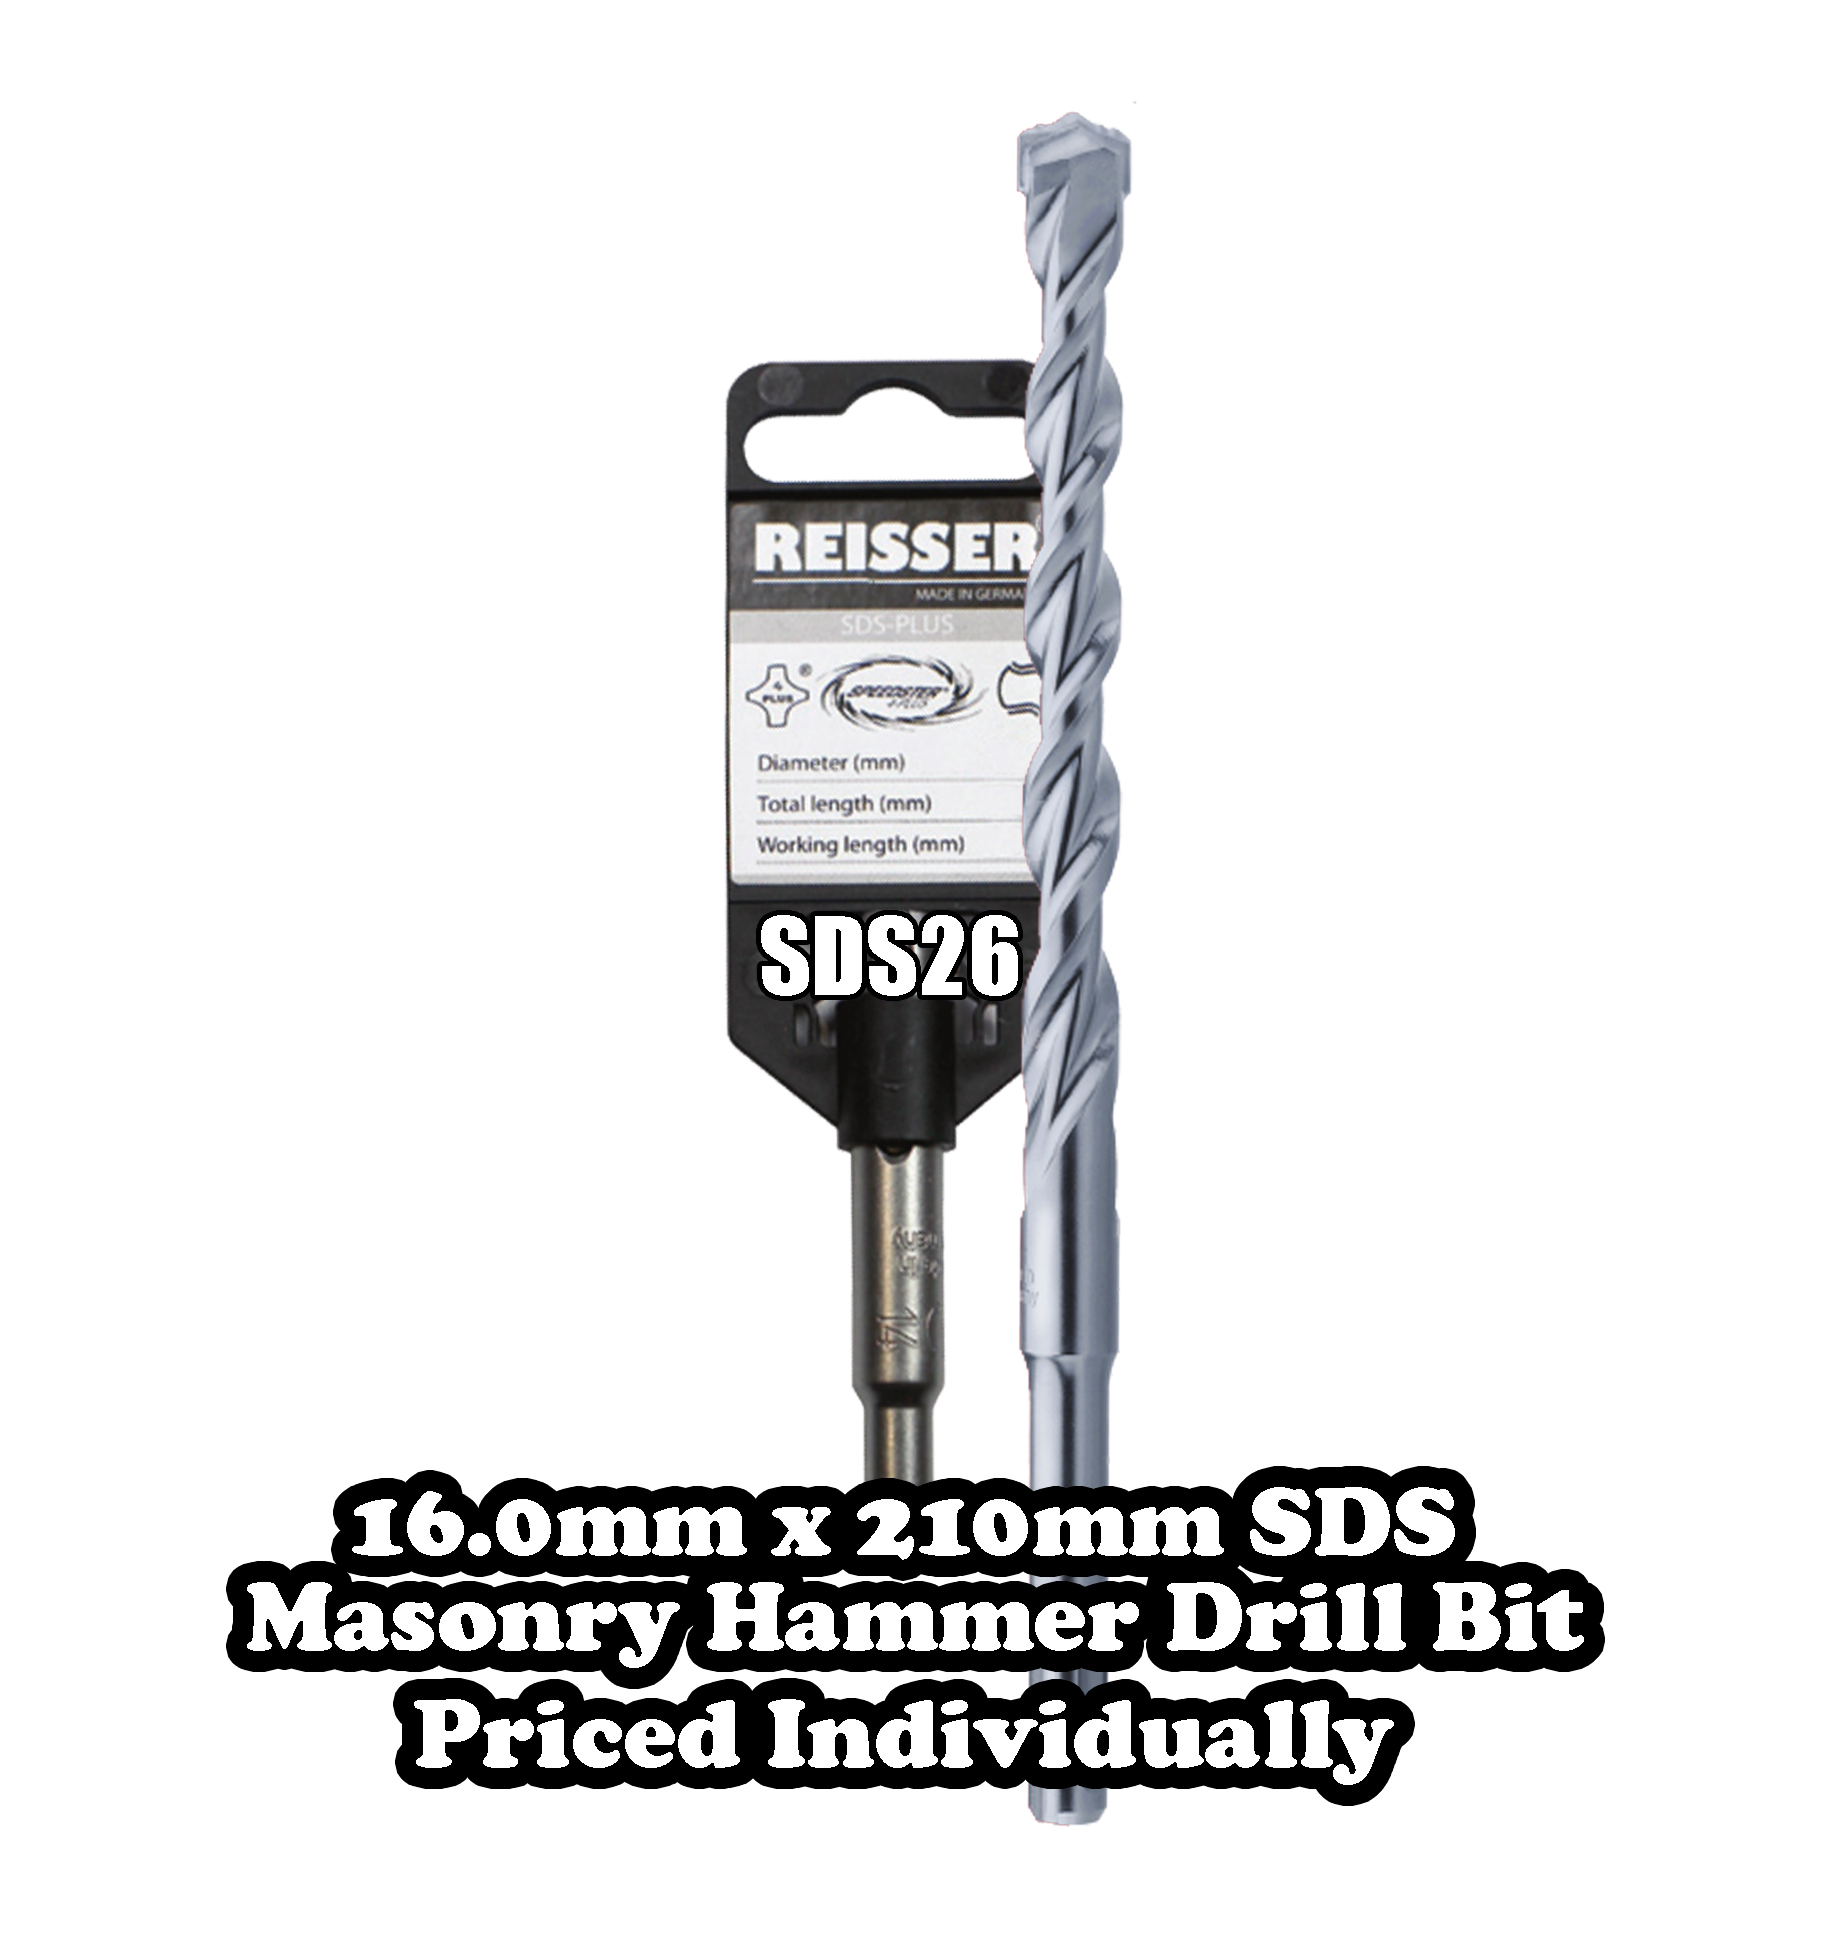 14.0mm x 210mm SDS Masonry Hammer Drill Bit